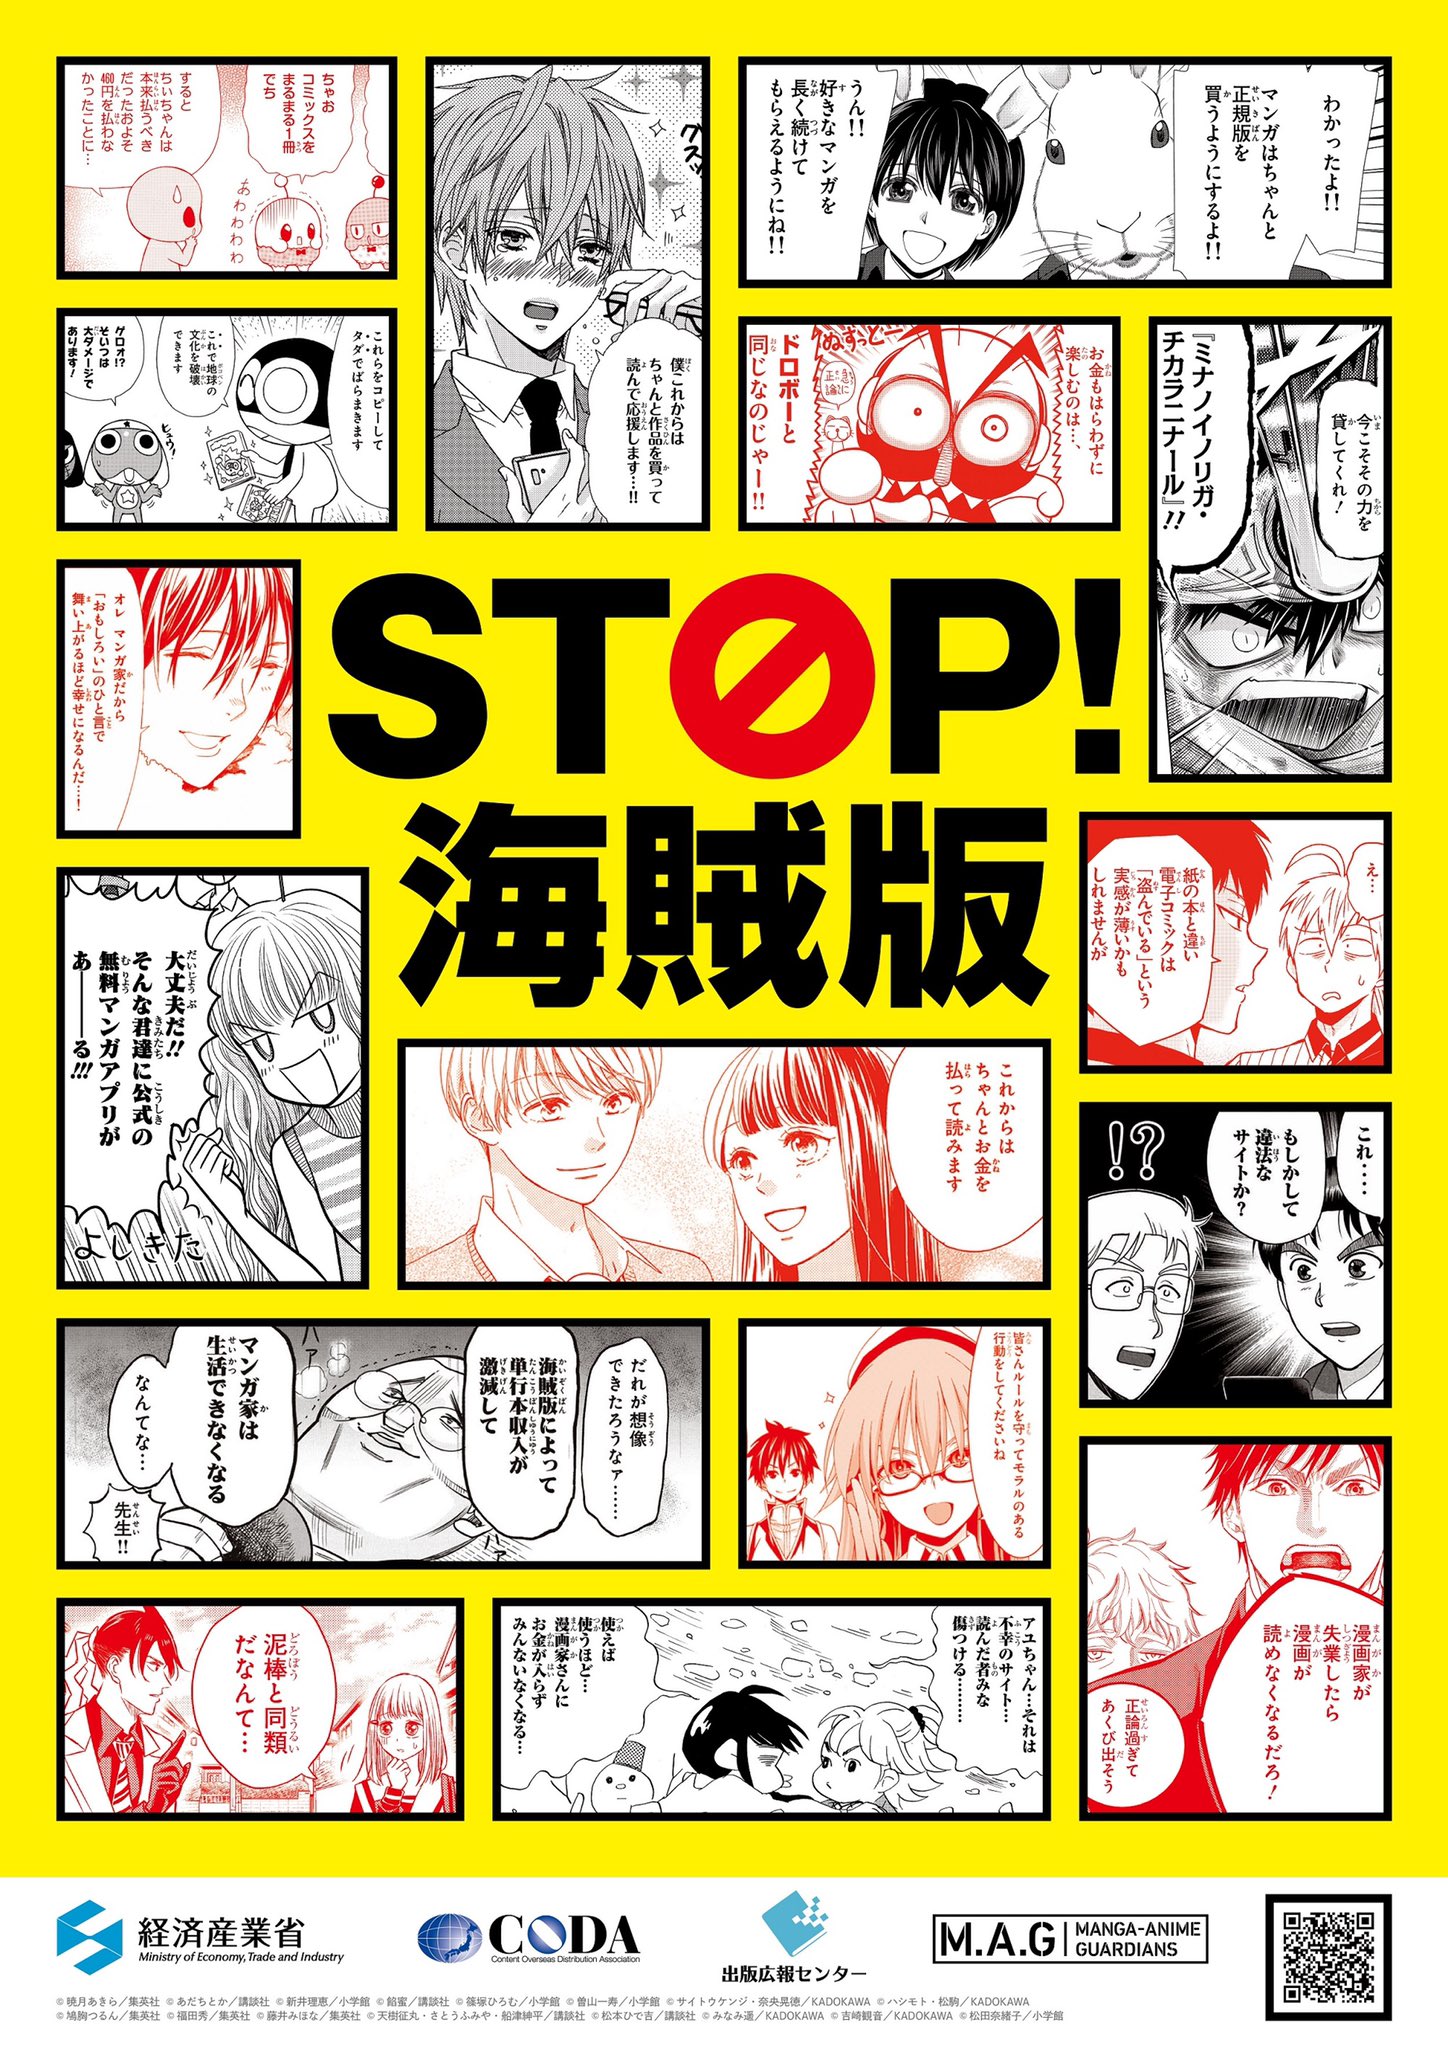 STOP! PIRACY (EUS) manga